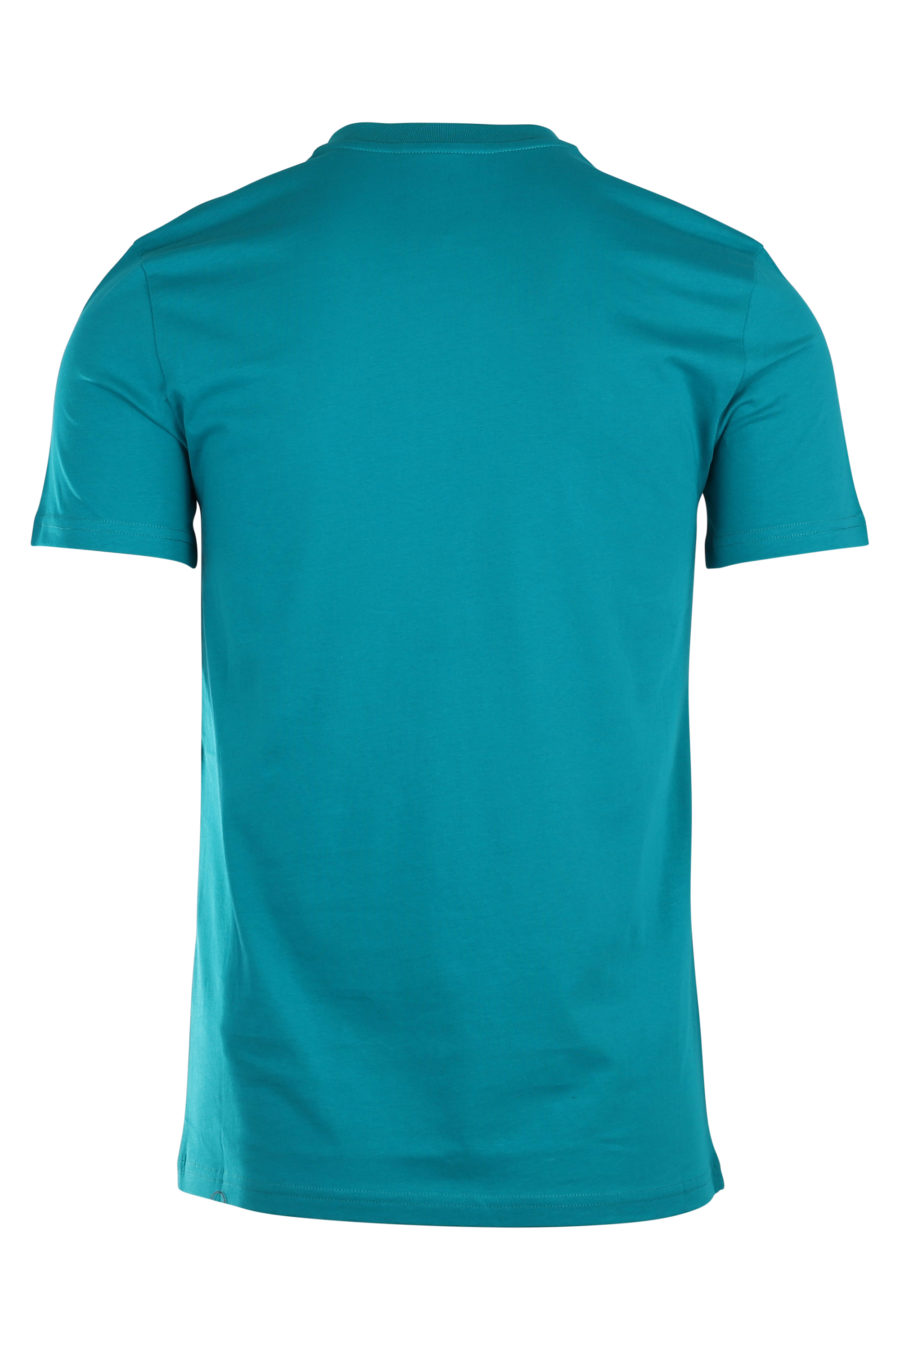 Camiseta color turquesa con logo milano "fantasy" - IMG 9914